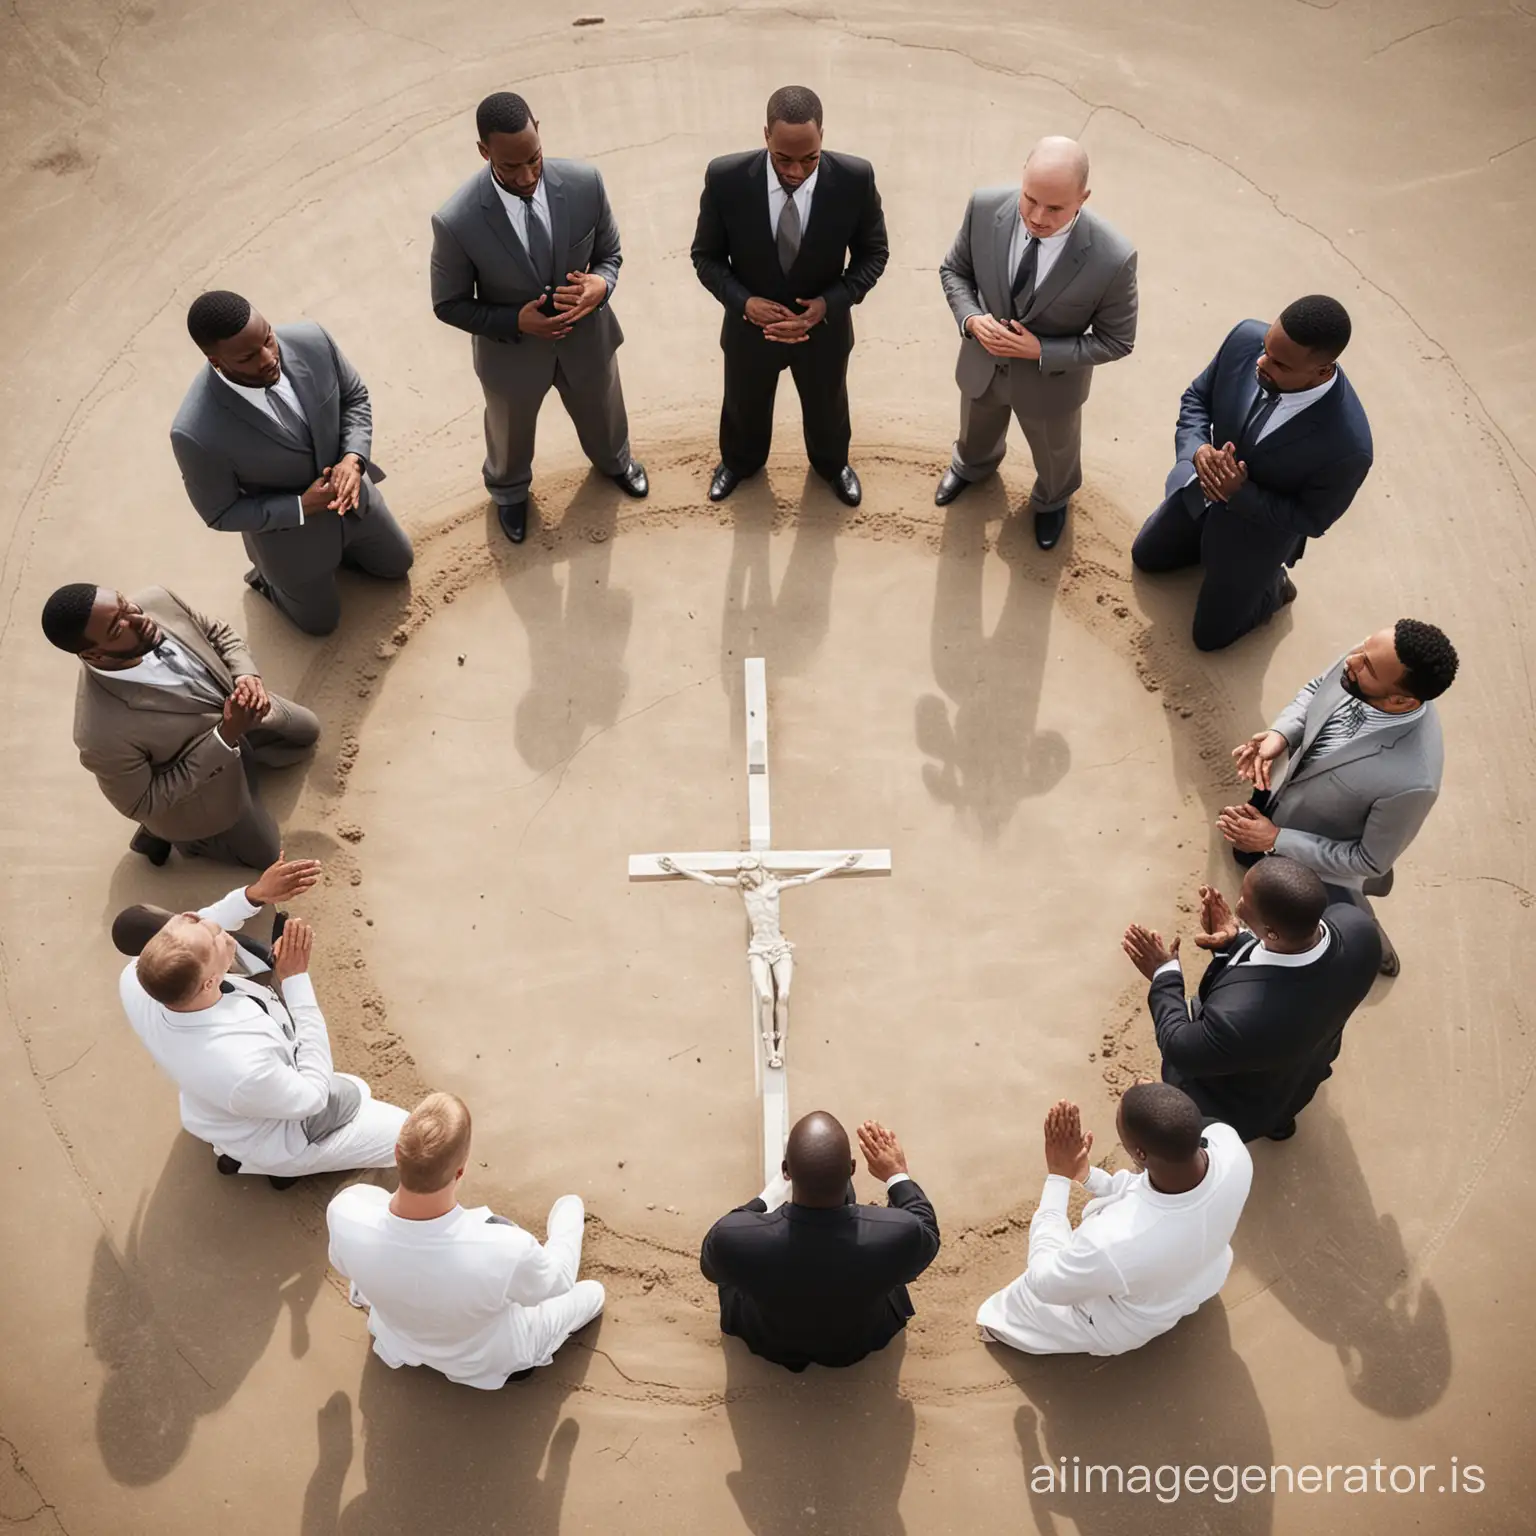 Diverse-Faith-Gathering-Black-Men-Praying-Around-a-Crucified-White-Figure